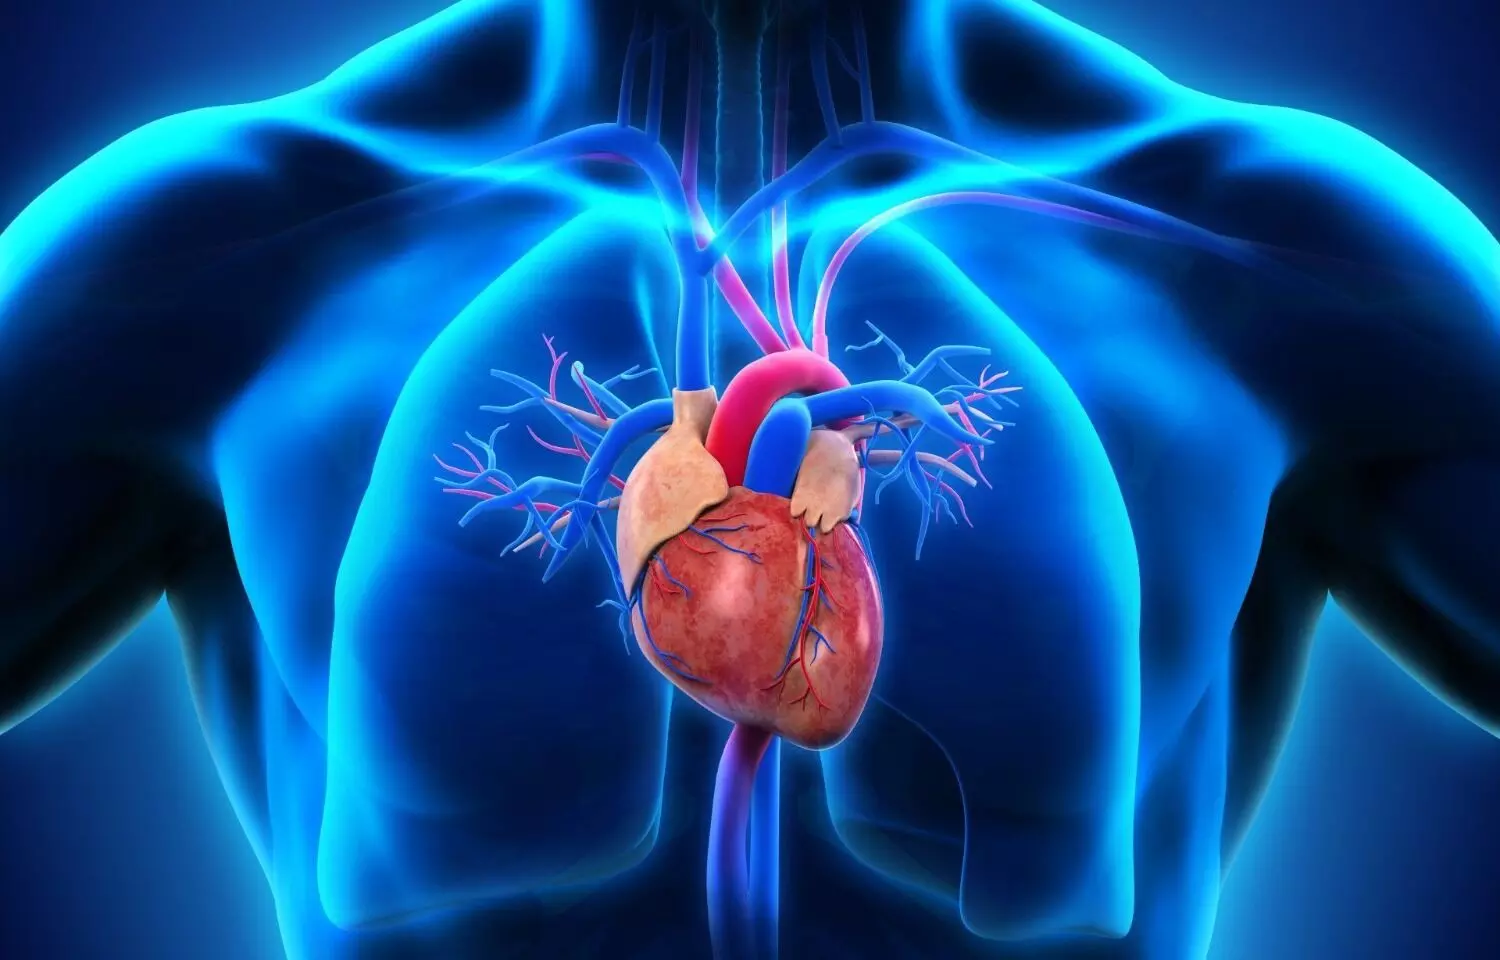 Hypertonic saline solution and IV furosemide improve outcomes in acute heart failure: Study